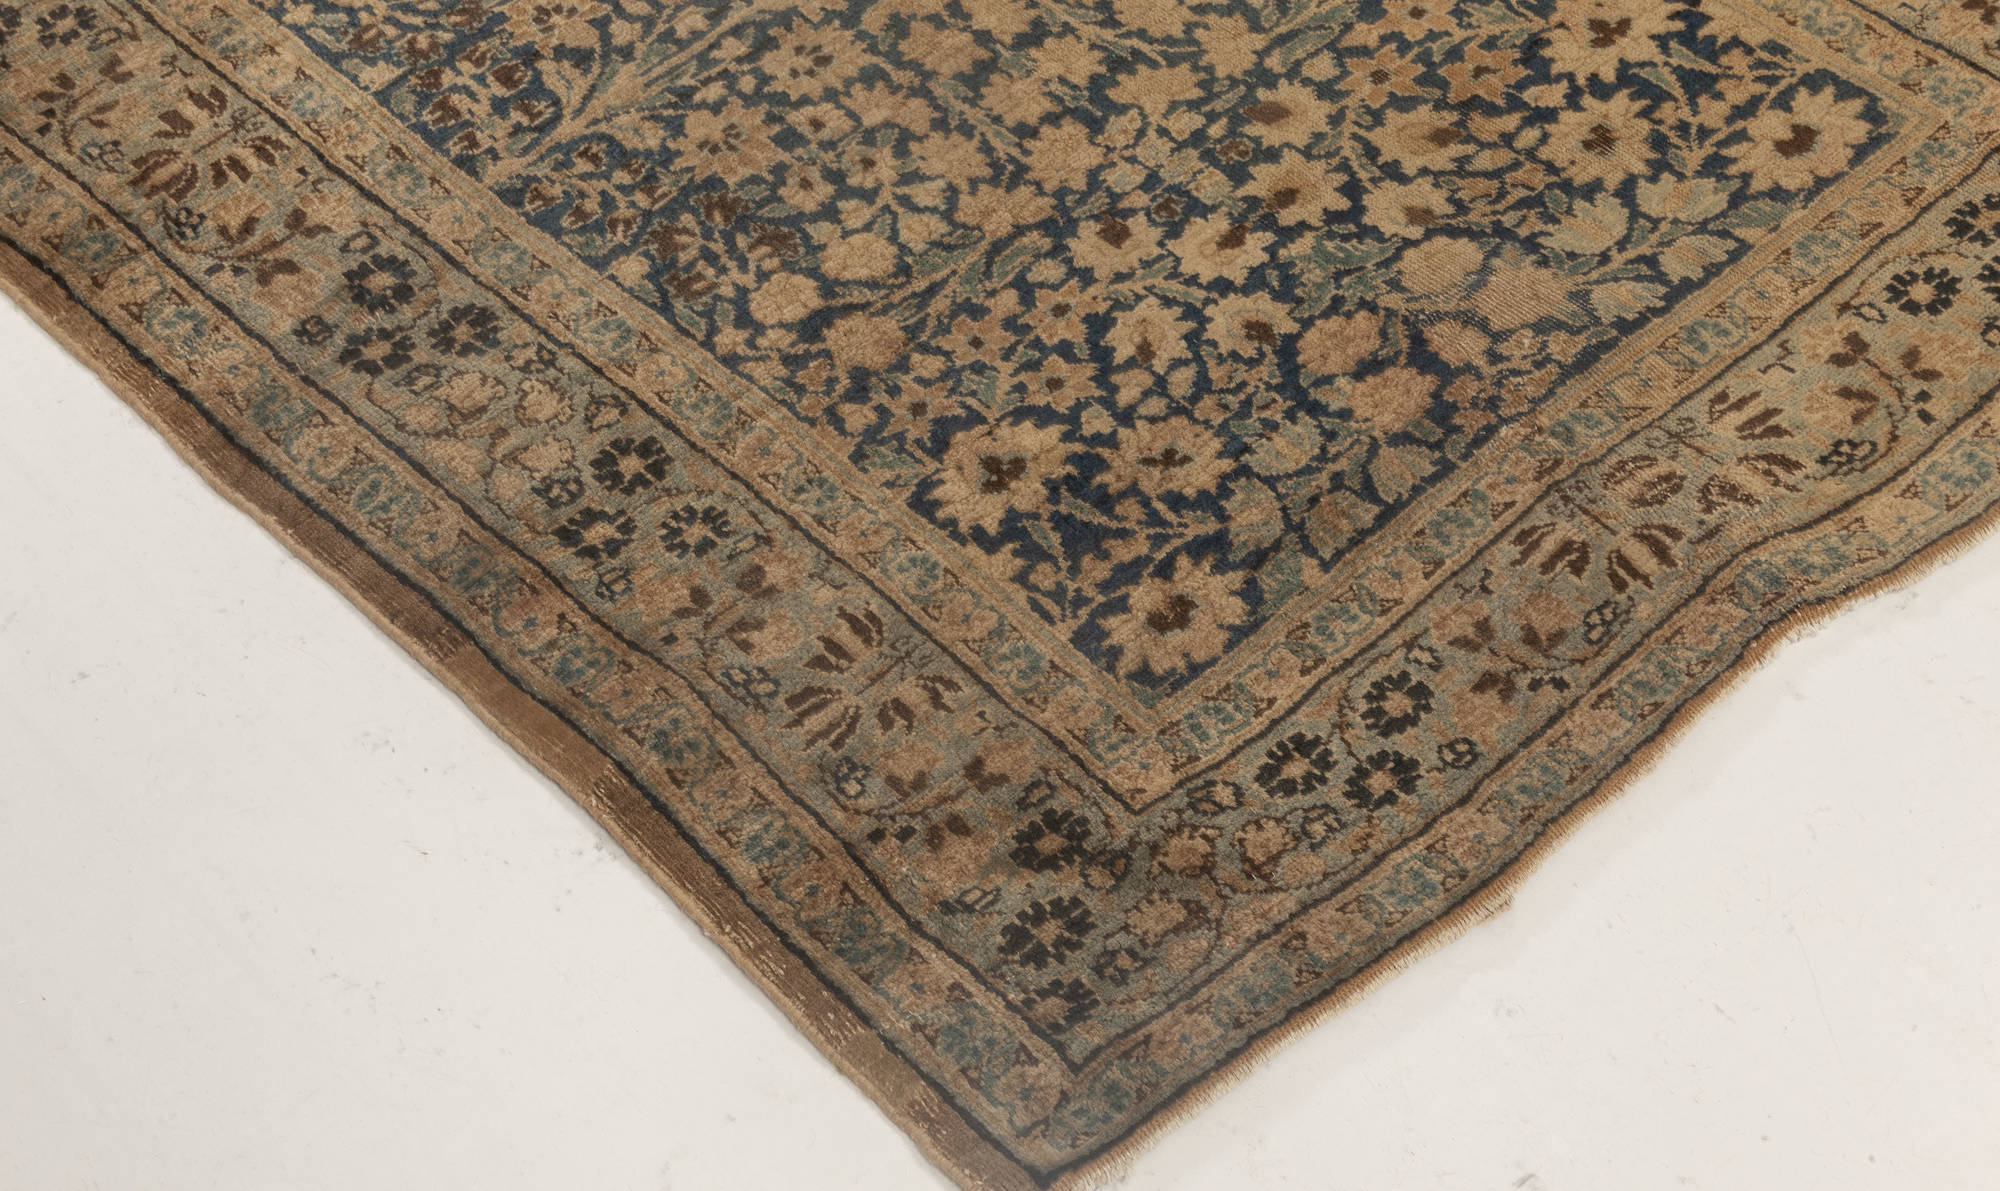 Antique Persian Kirman Indigo Blue, Beige and Brown Handwoven Wool ...